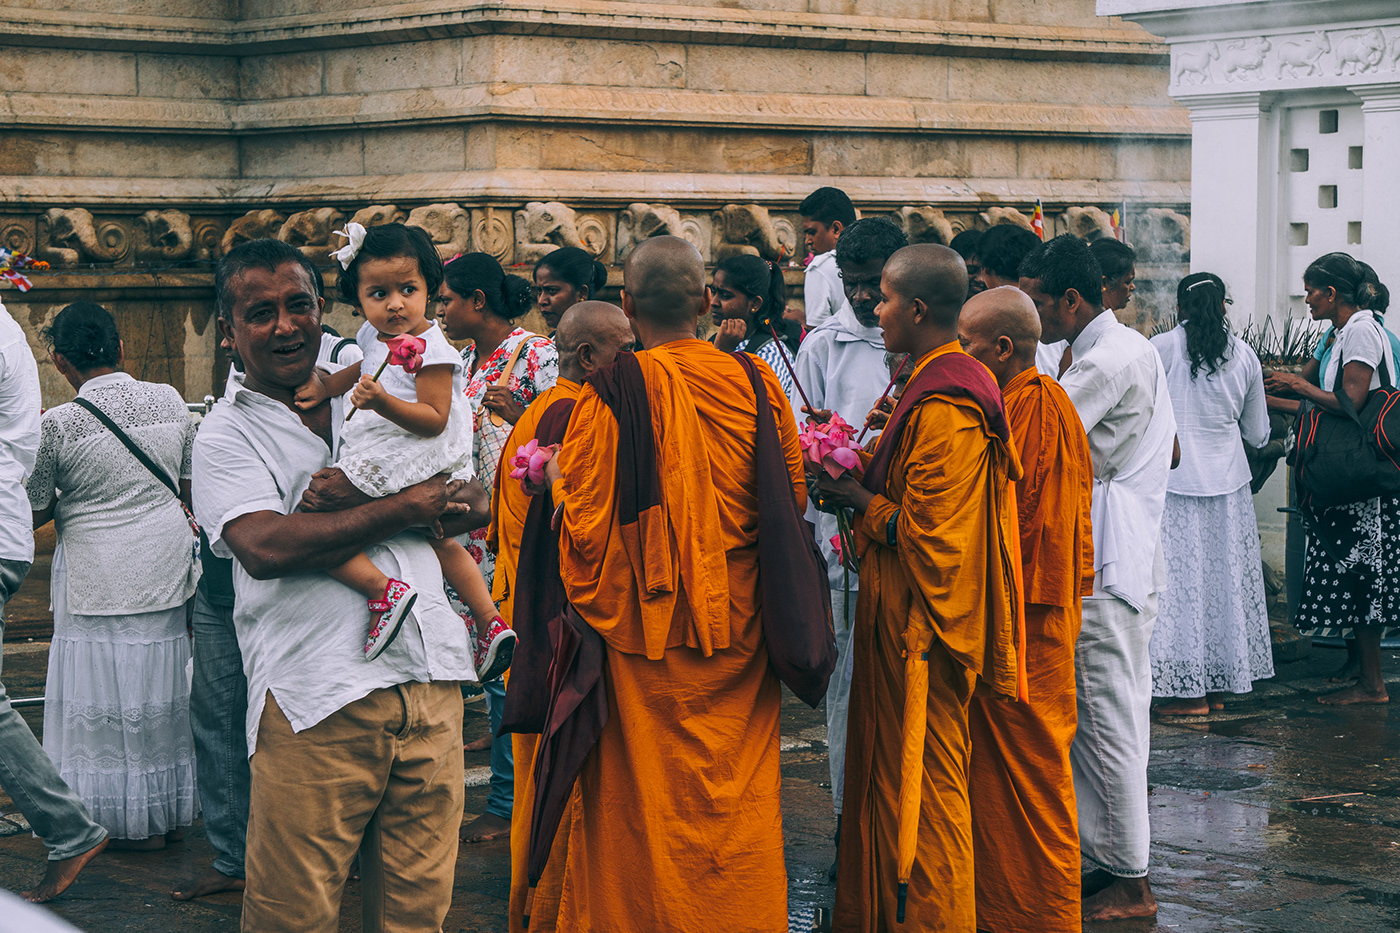 Sri lanka full moon Buddhist travel photography orange Lotus Buddha asia adobeawards sony alpha